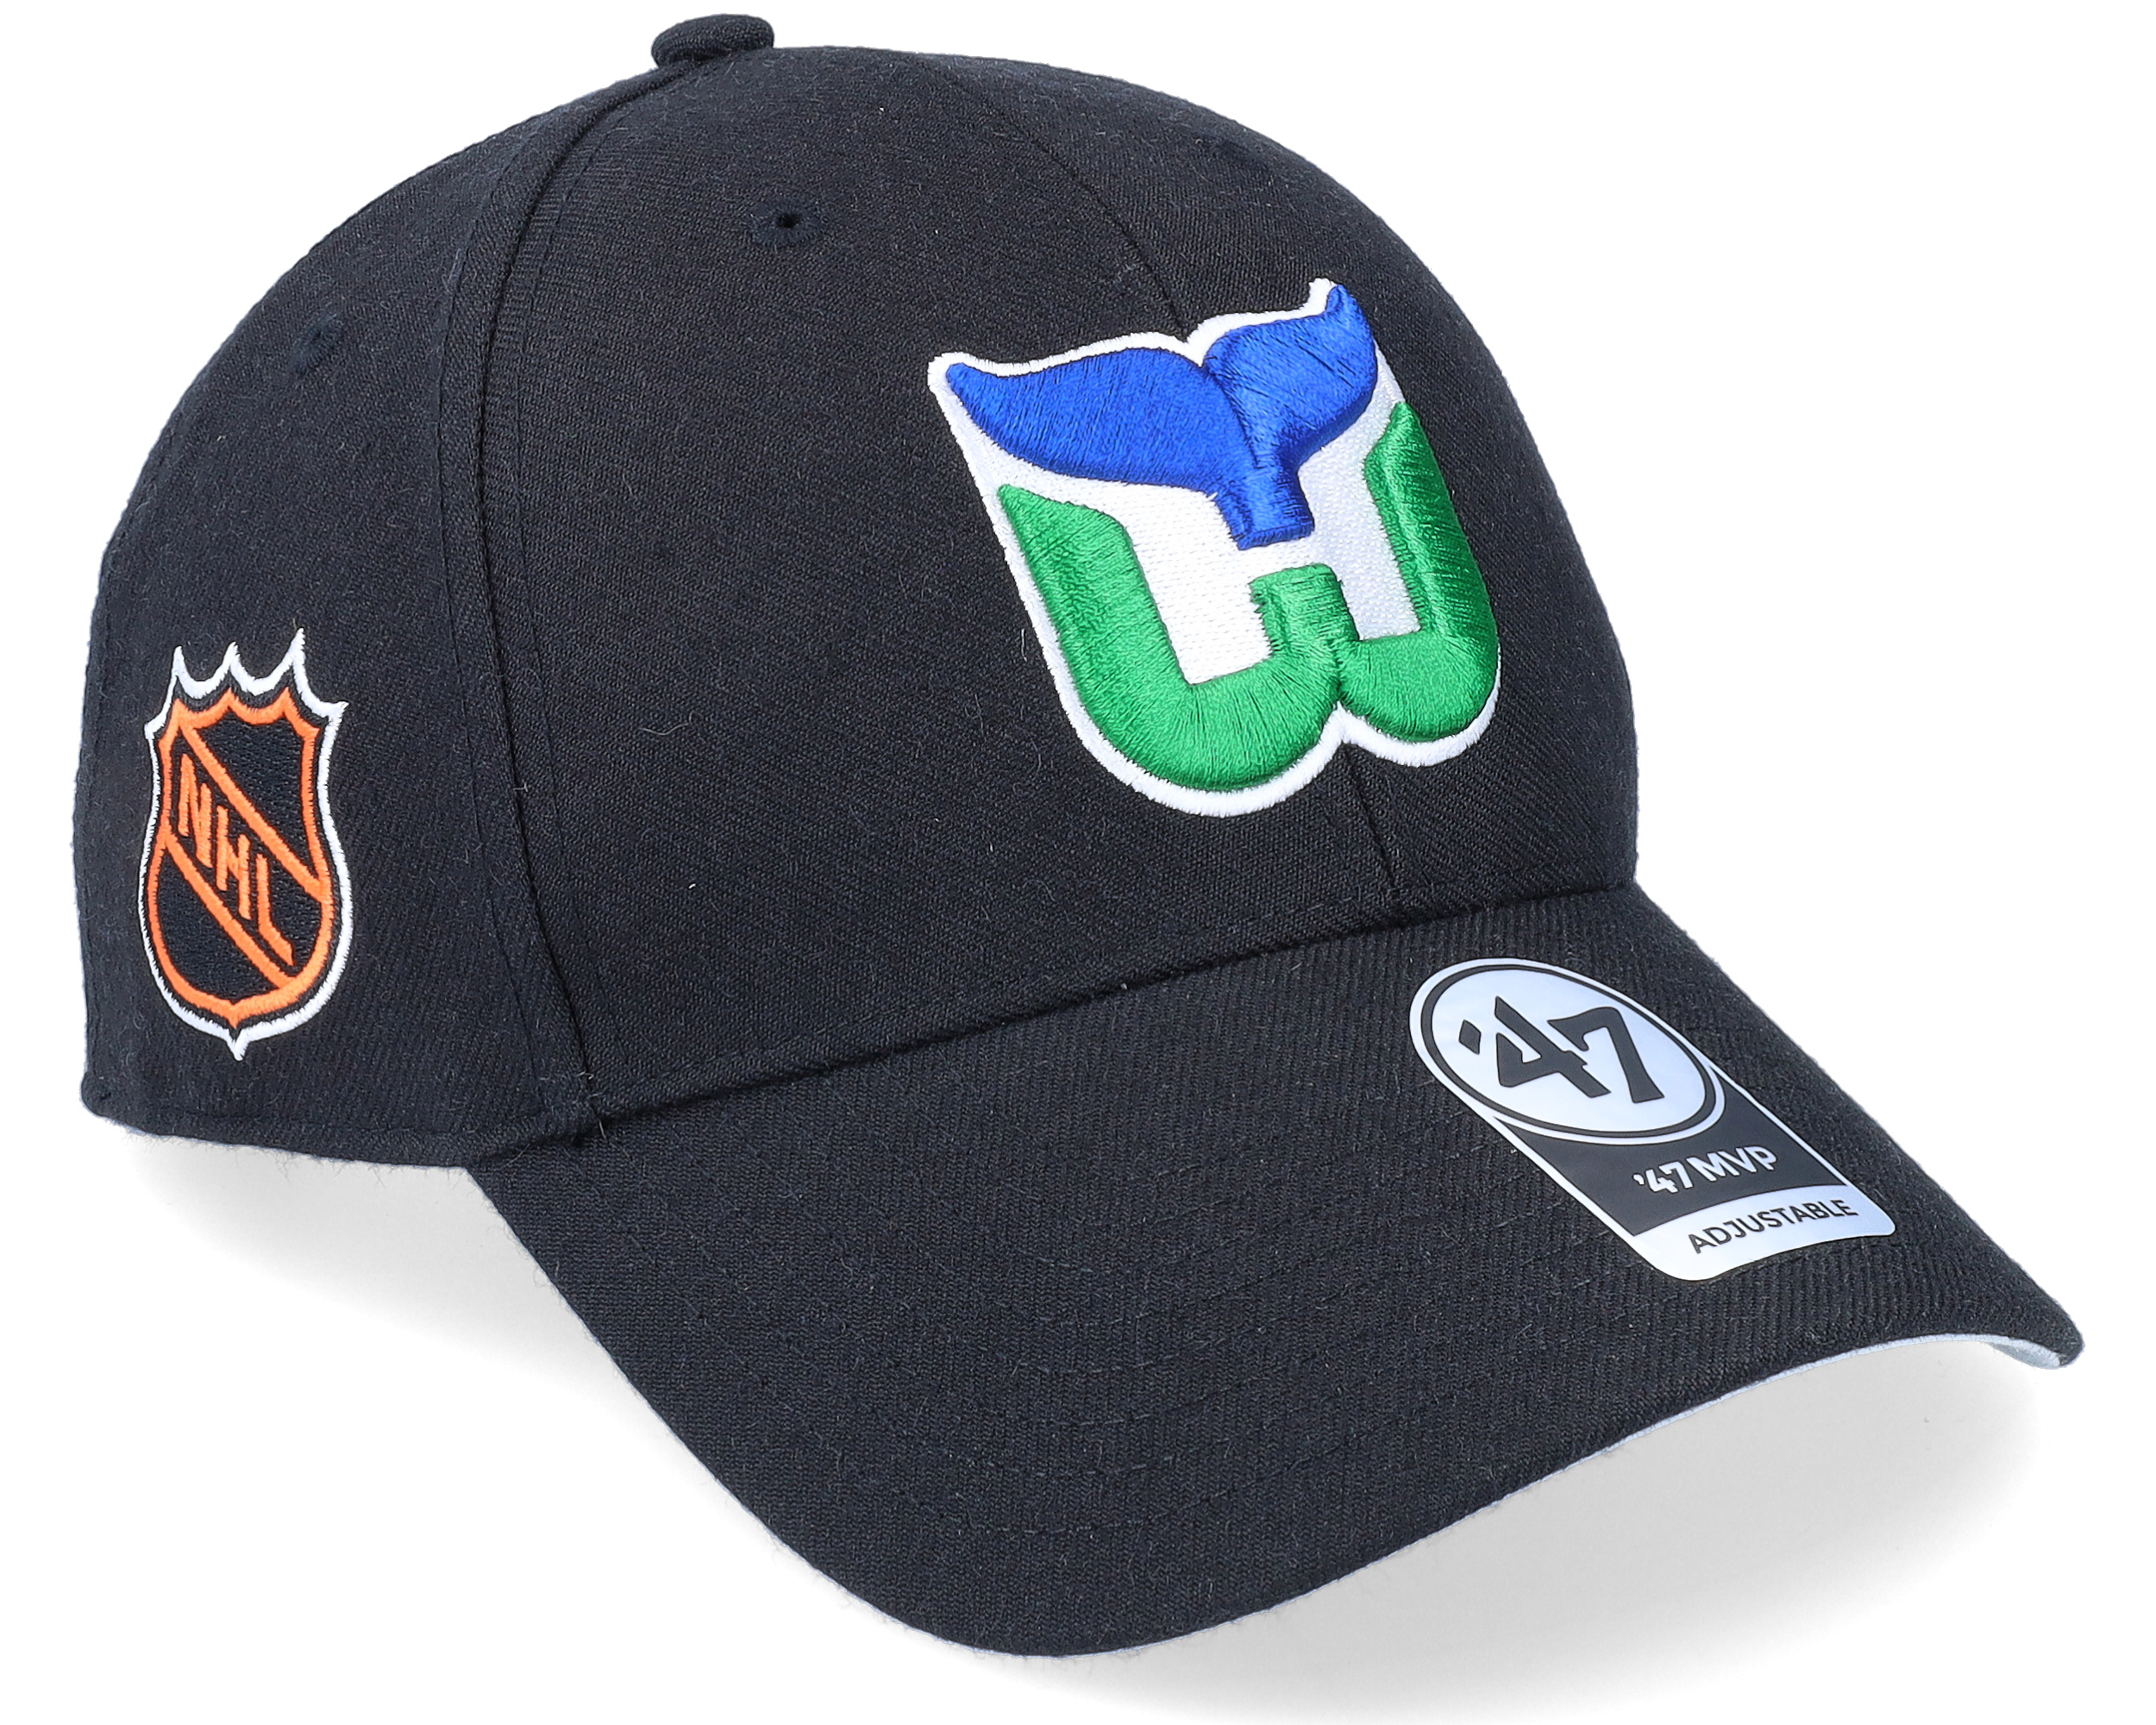 NHL Hartford Whalers 47 Brand Hat Cap Snapback